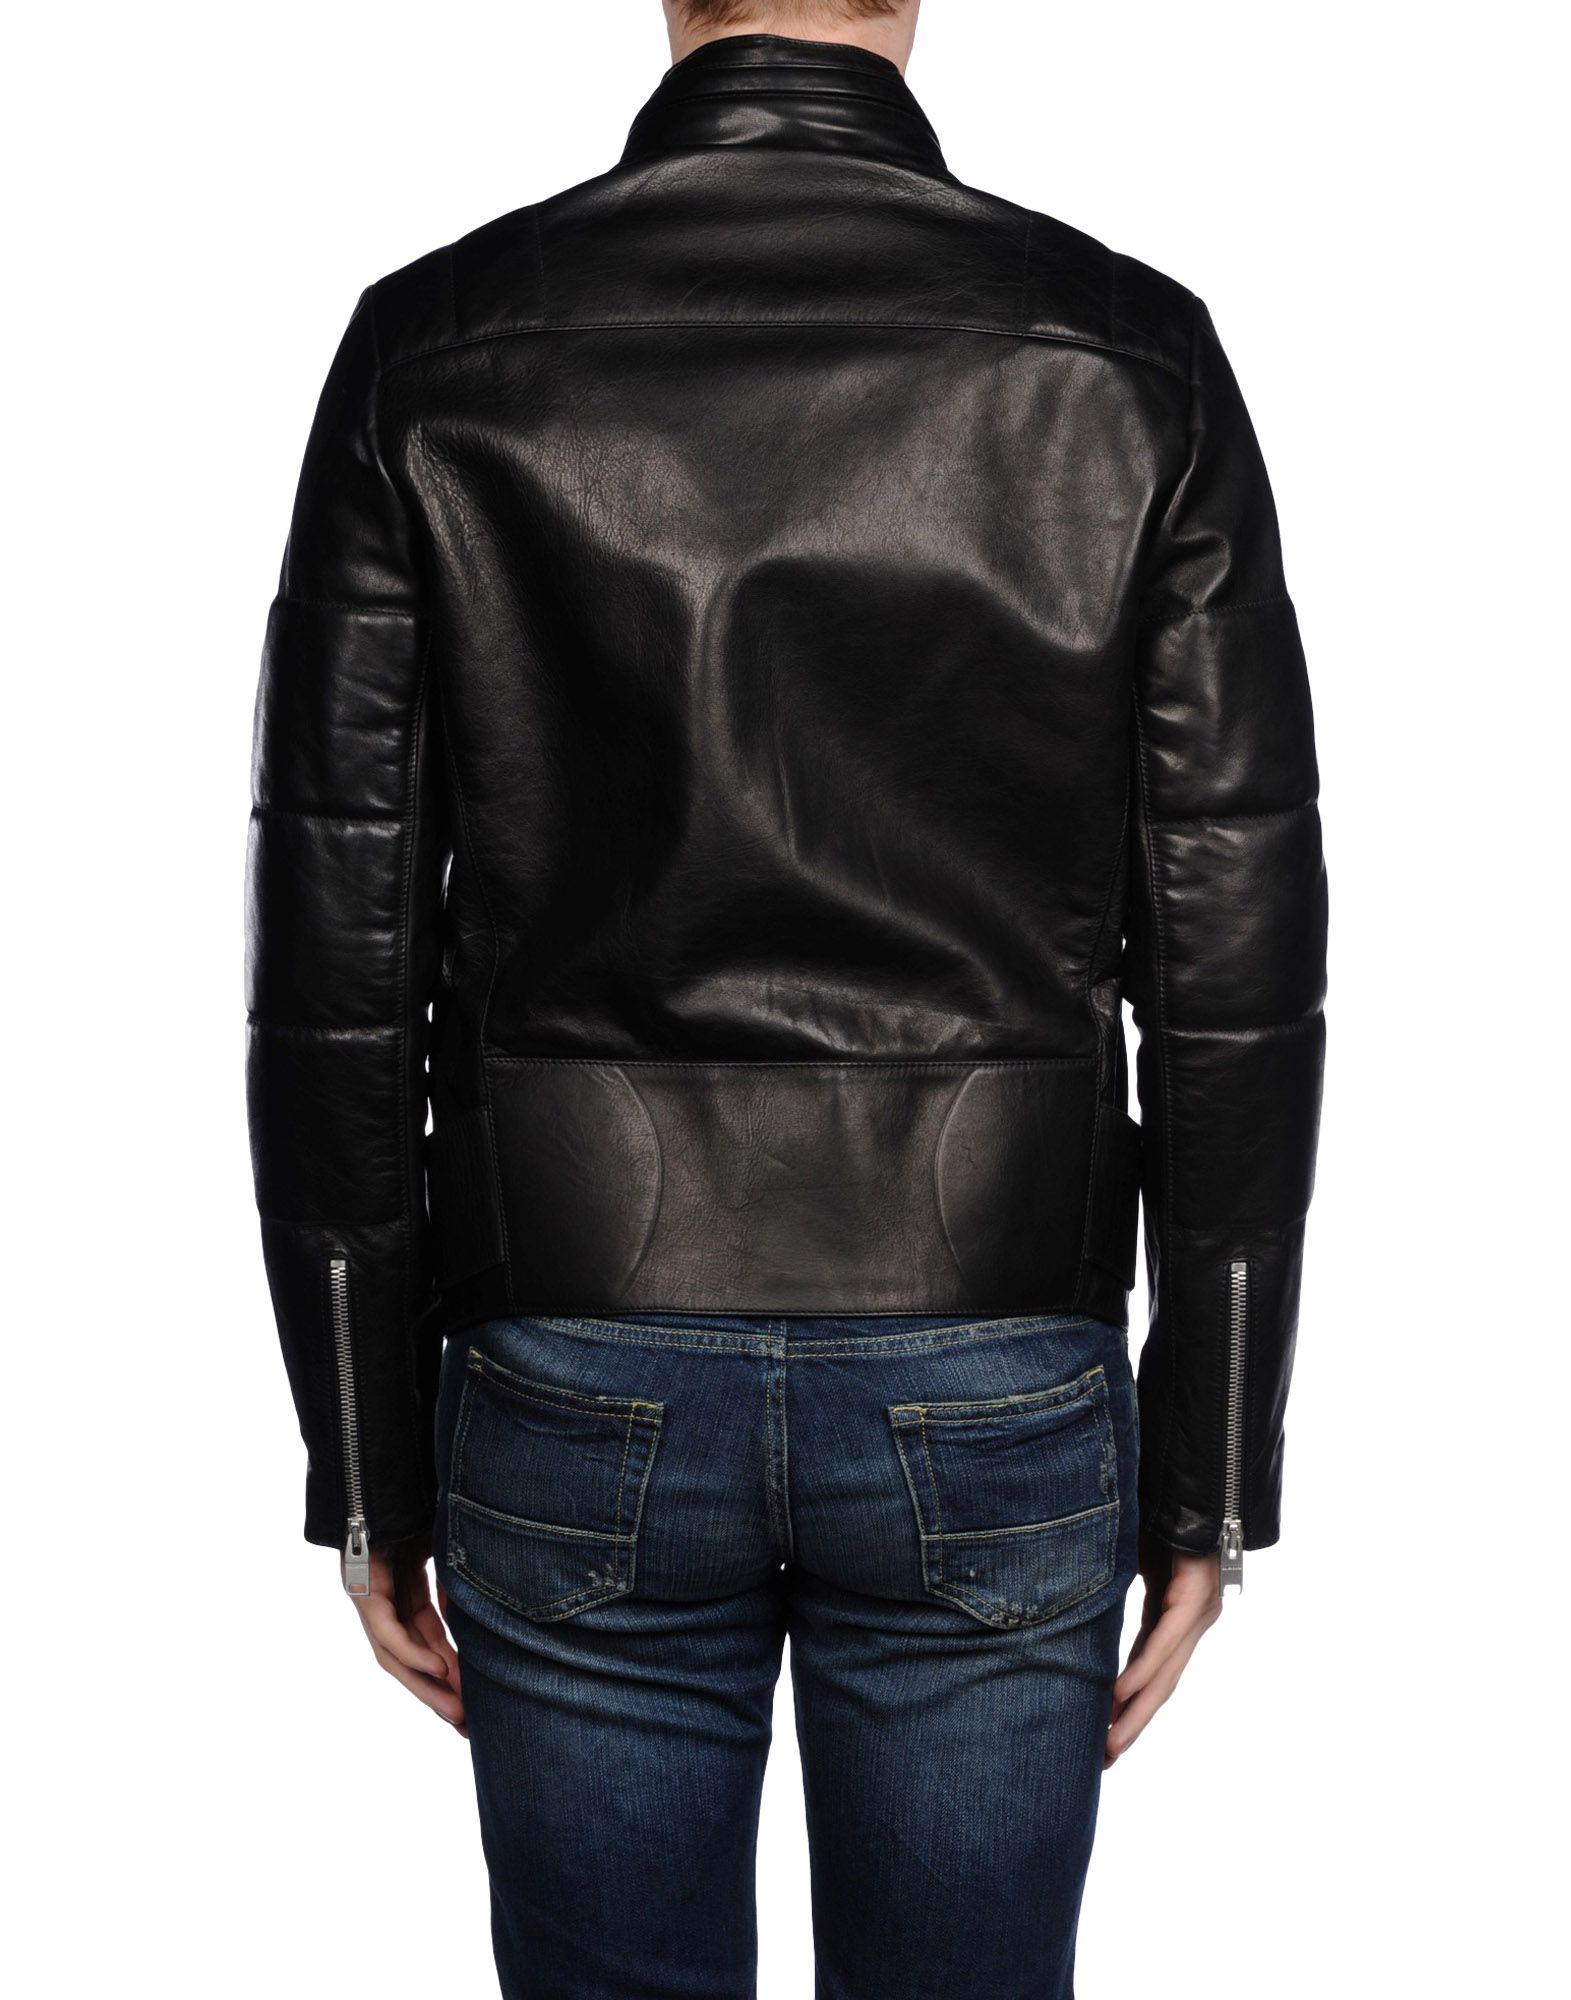 Balenciaga Leather Jacket in Black for Men - Lyst